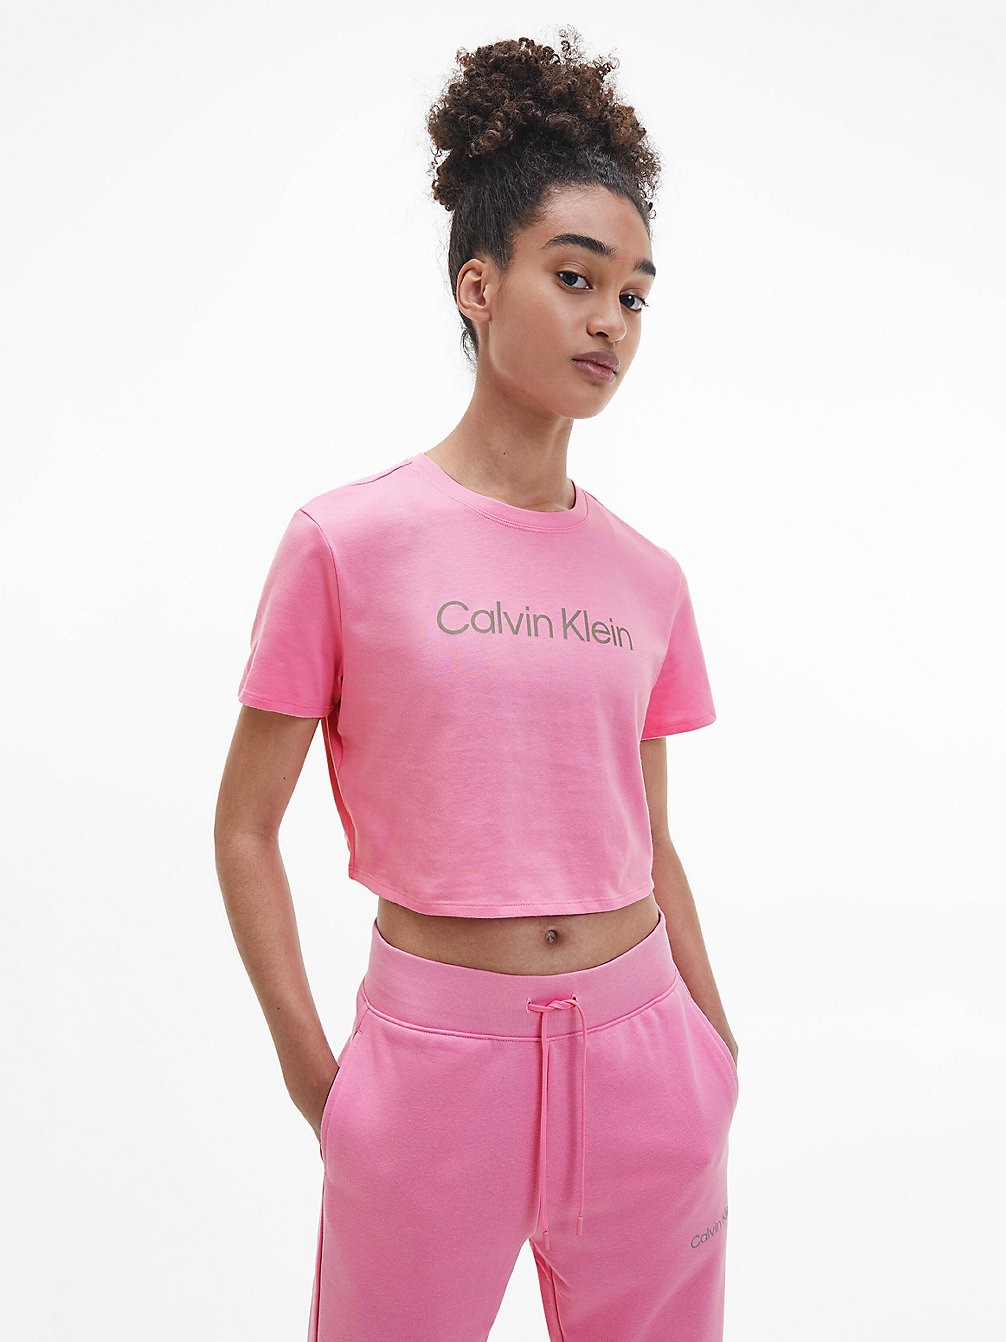 ROSEBLOOM > Укороченная спортивная футболка > undefined Женщины - Calvin Klein